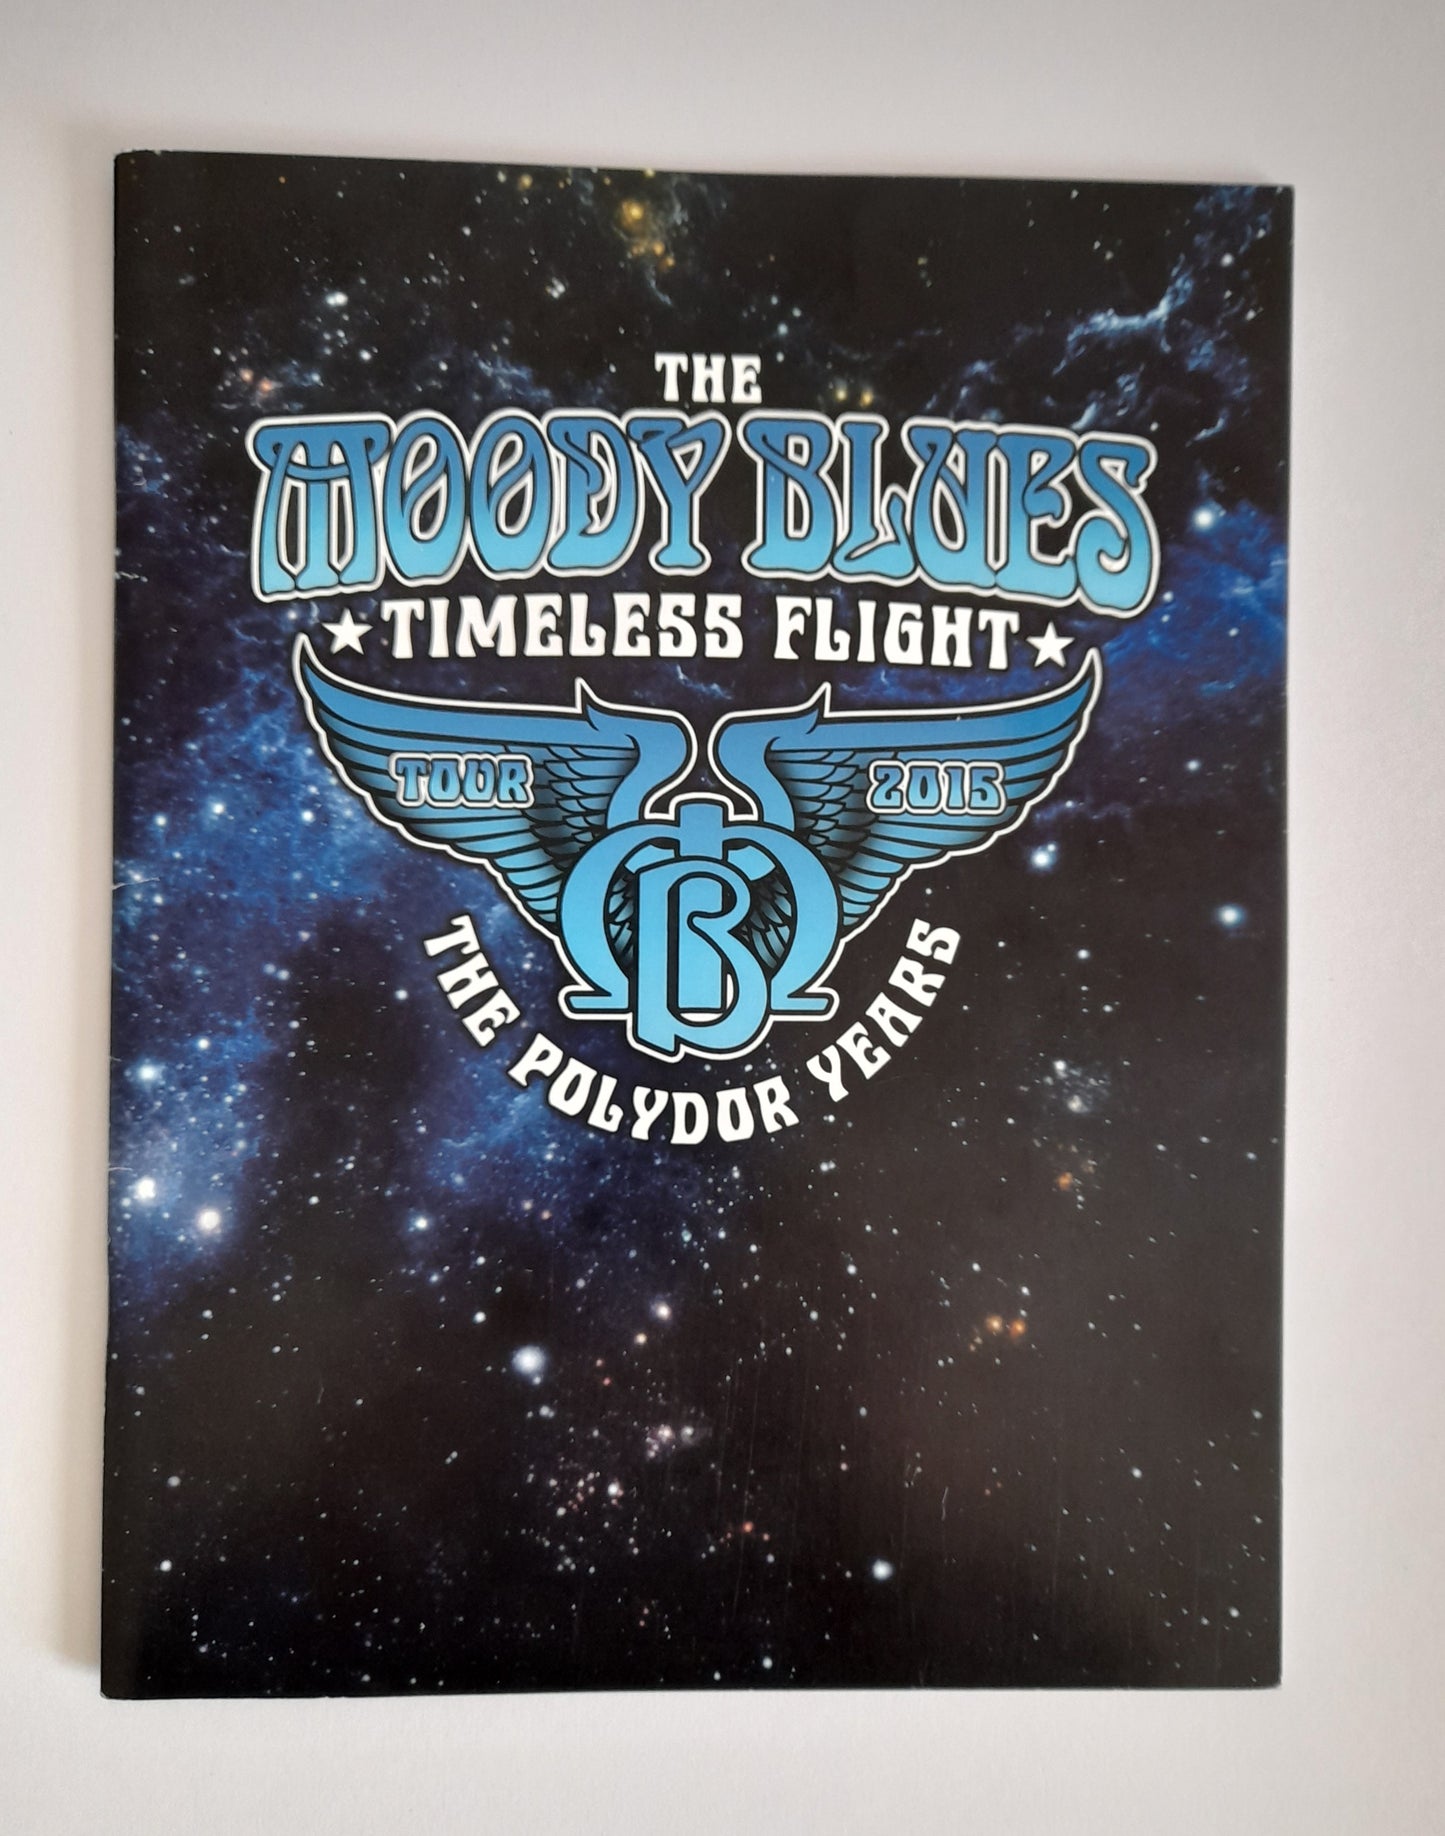 The Moody Blues Timeless Flight Tour Programme 2015